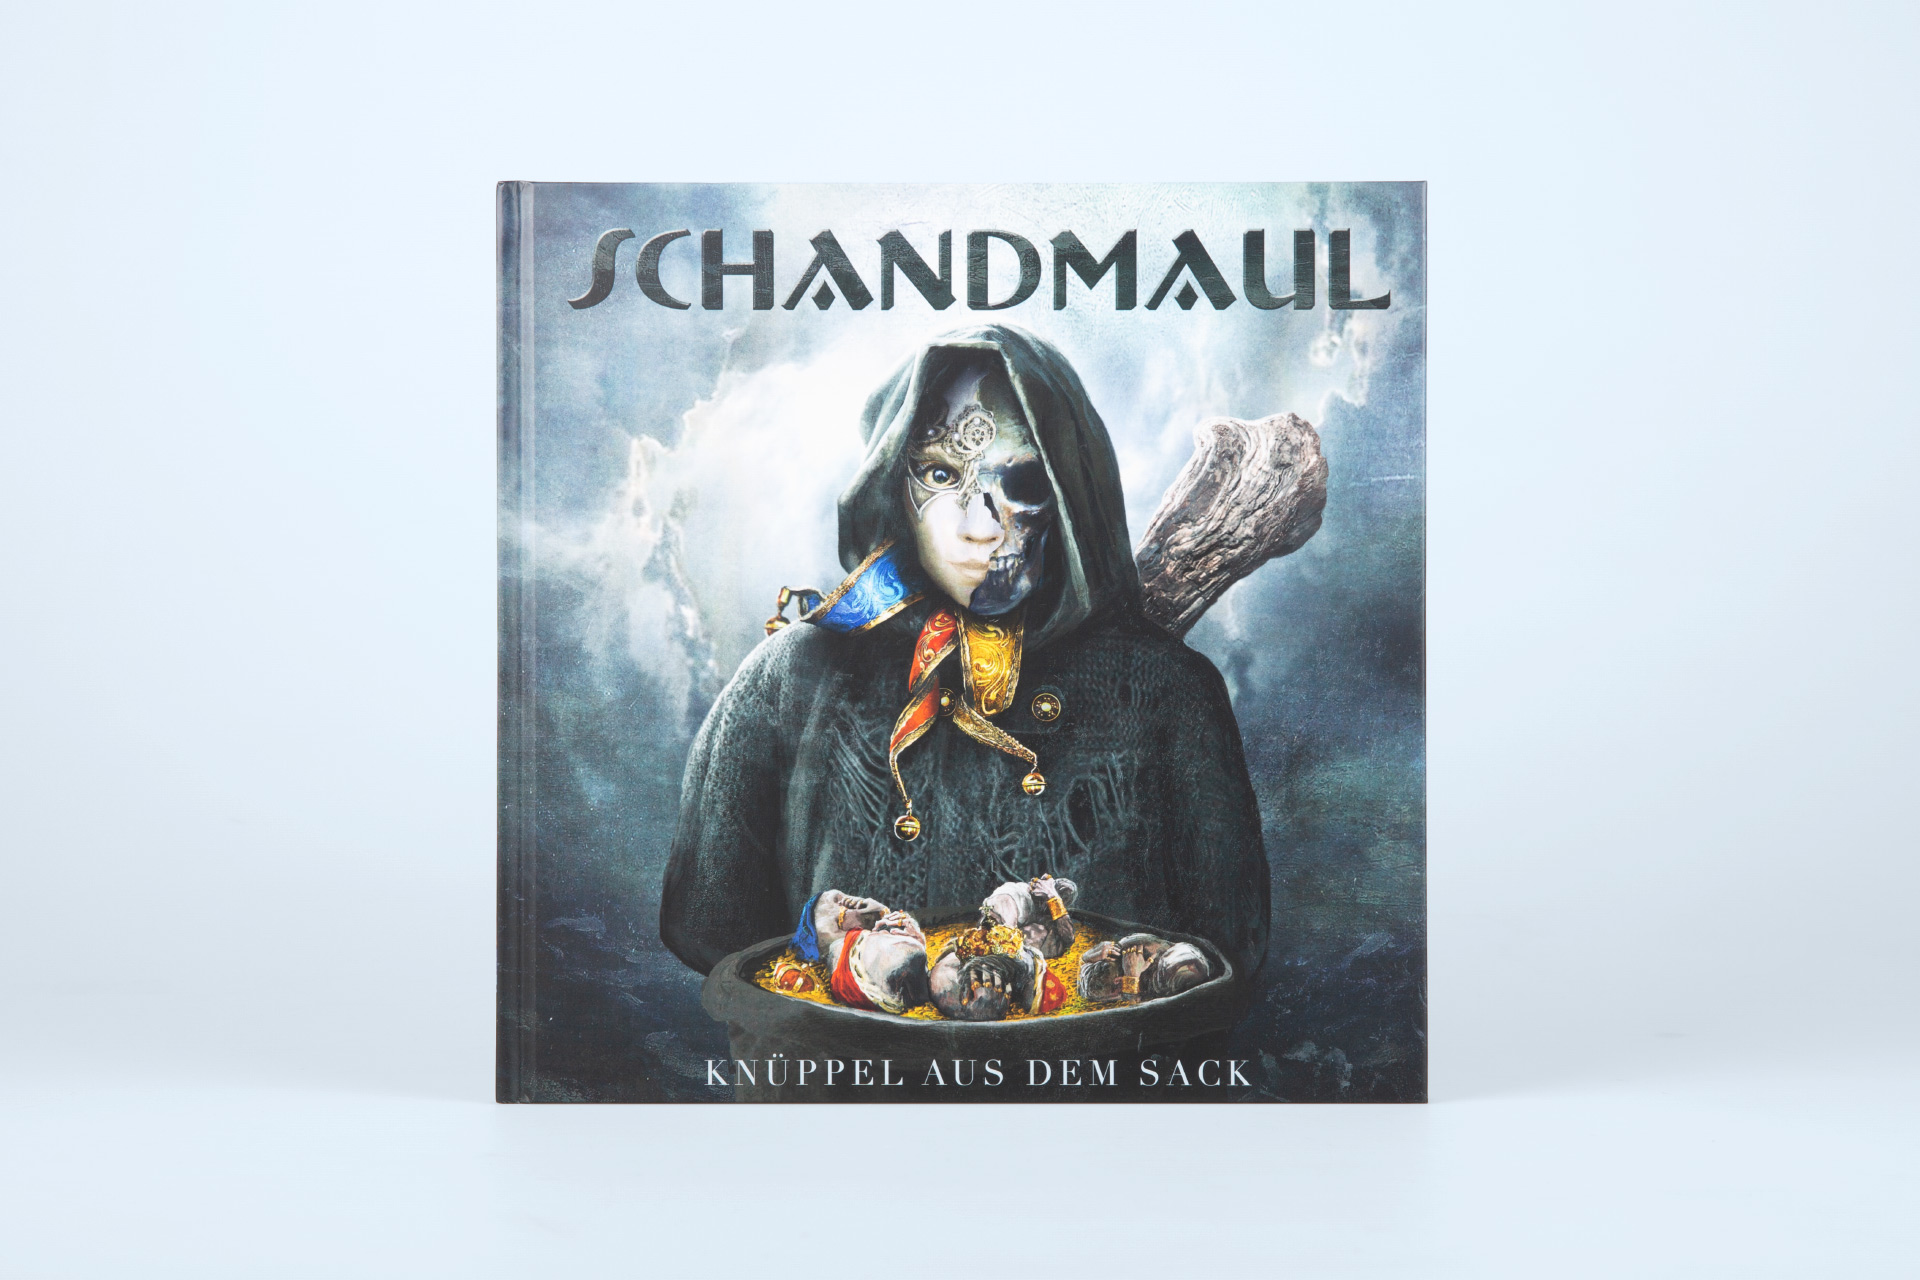 Schandmaul - Knüppel aus dem Sack | Napalm Records | earBOOK in vinyl record format